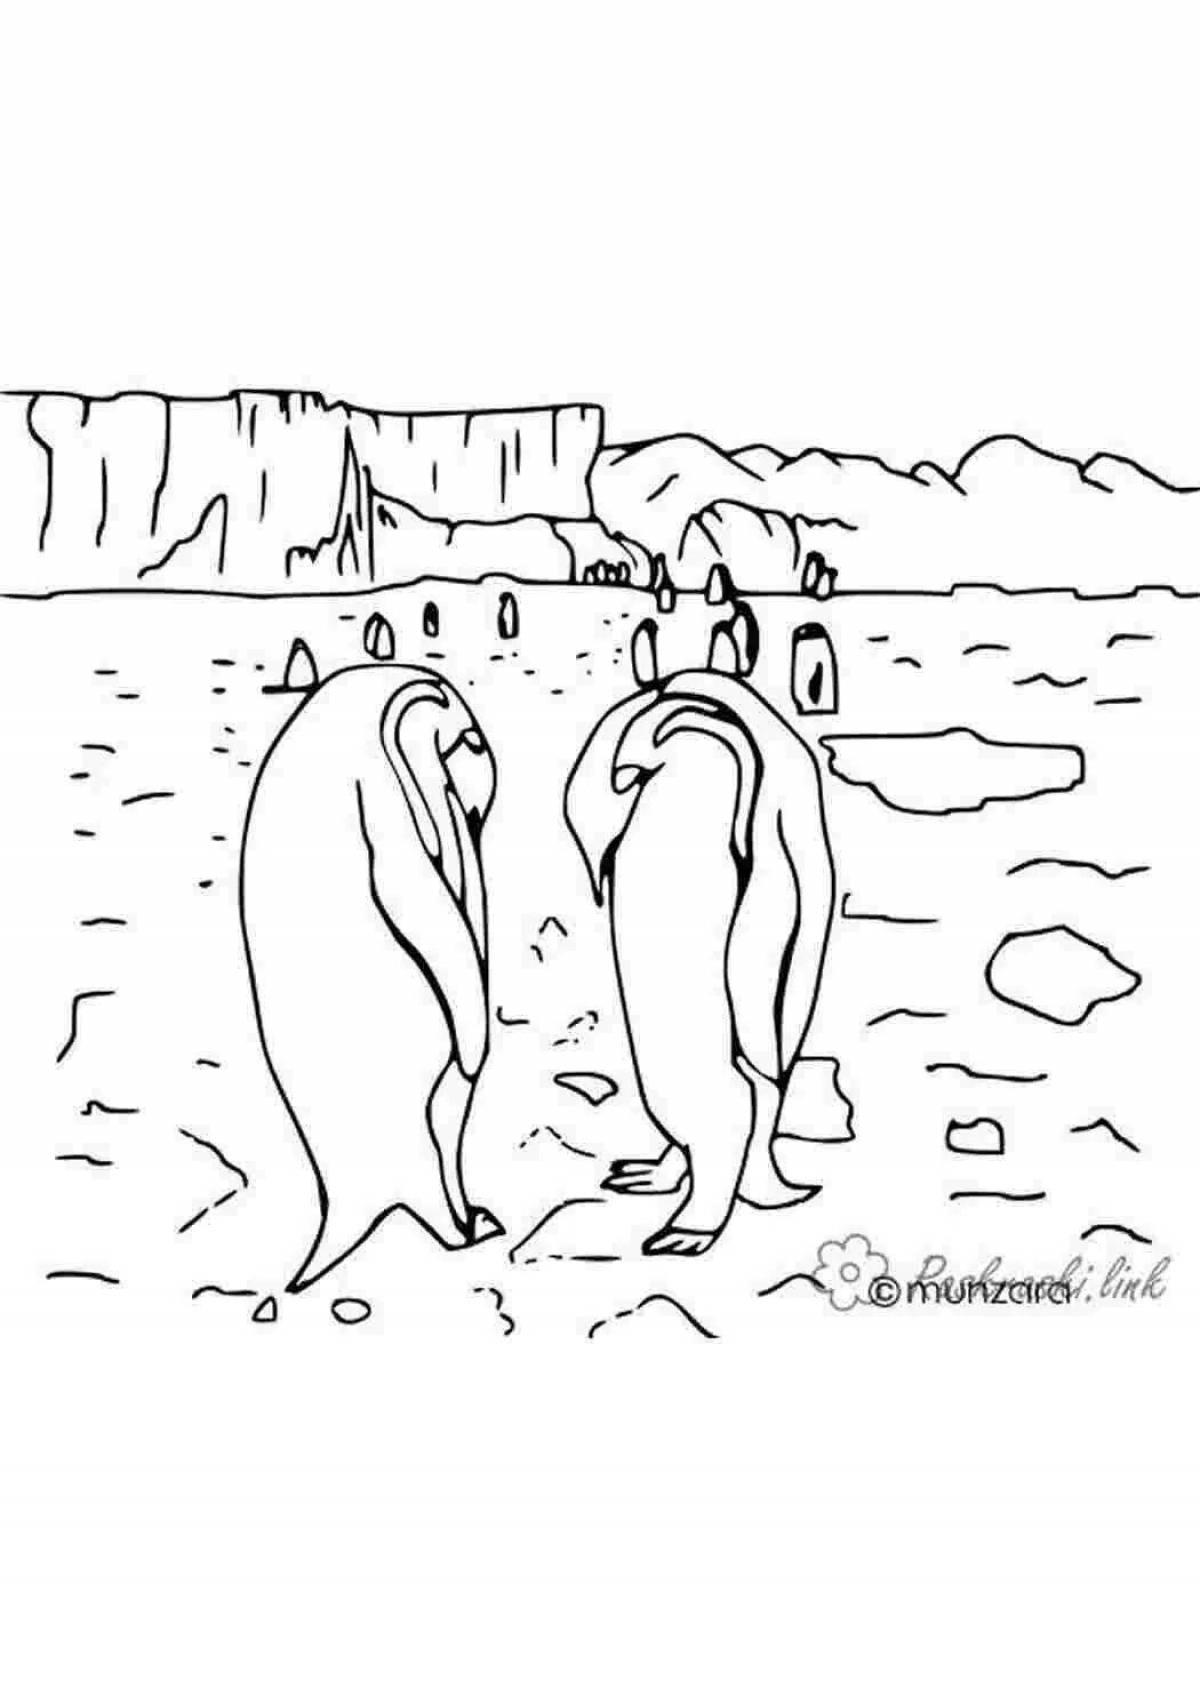 Симпатичные пингвины антарктиды